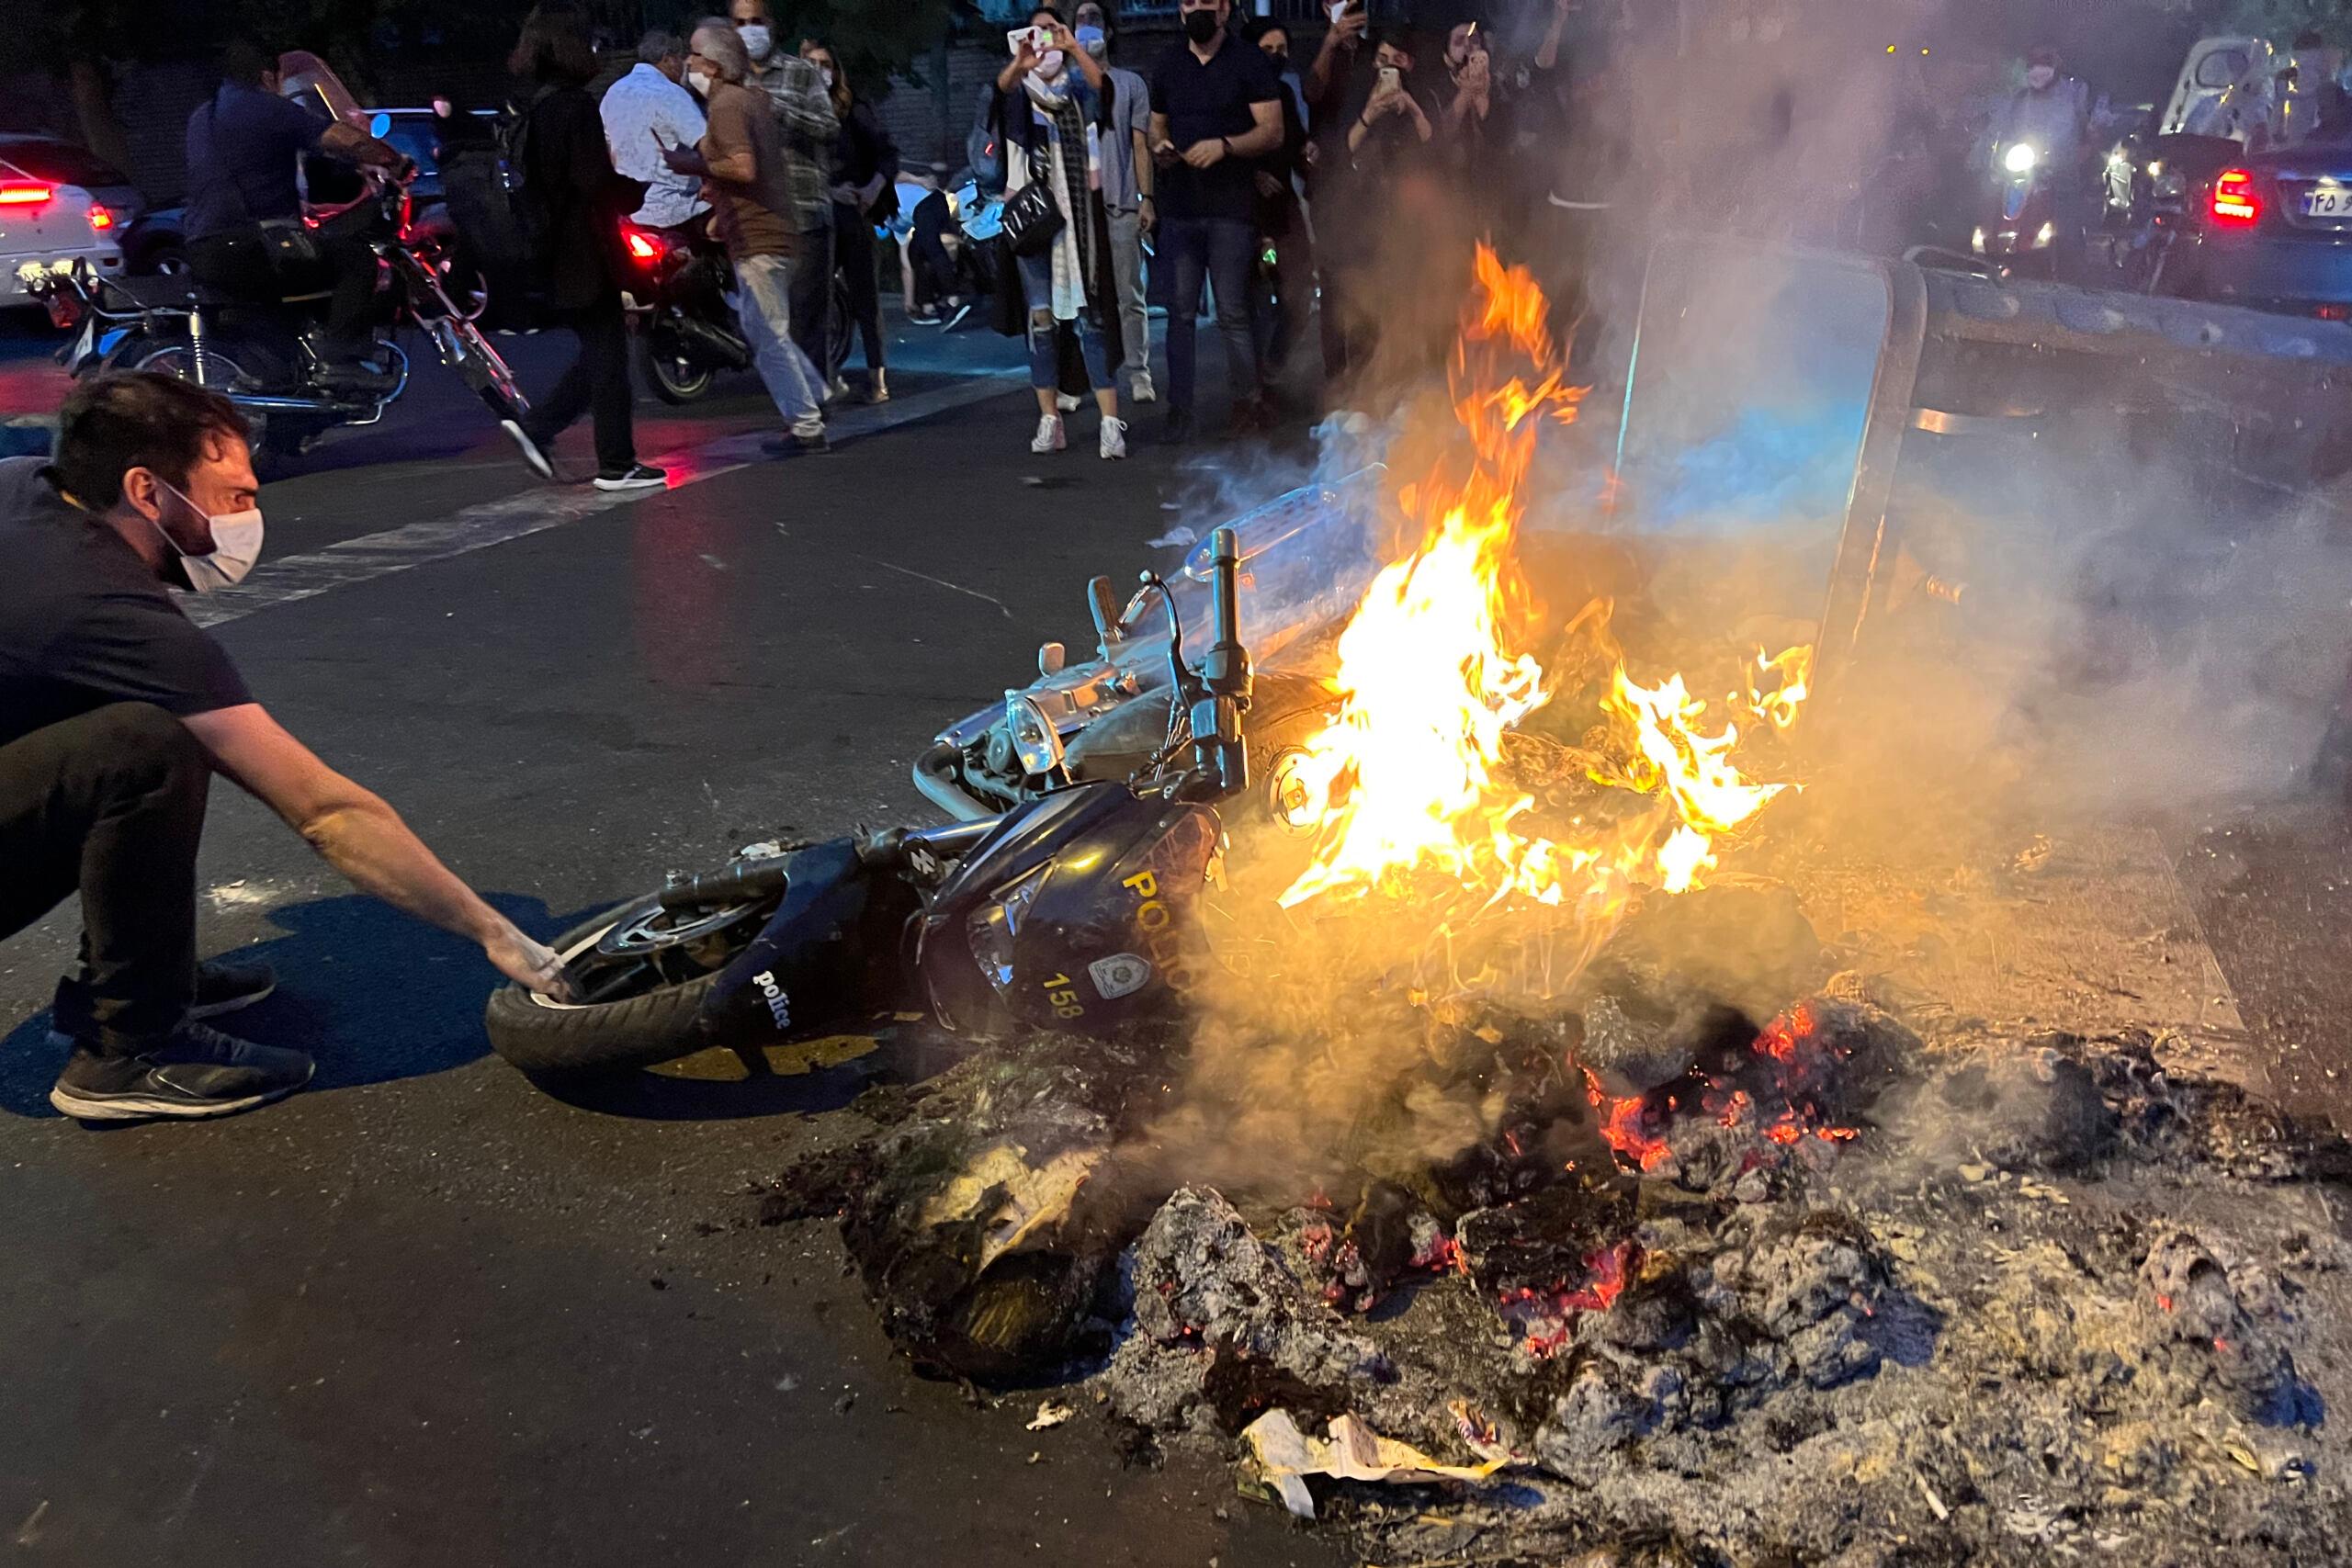 płonący motocykl podczas protestu